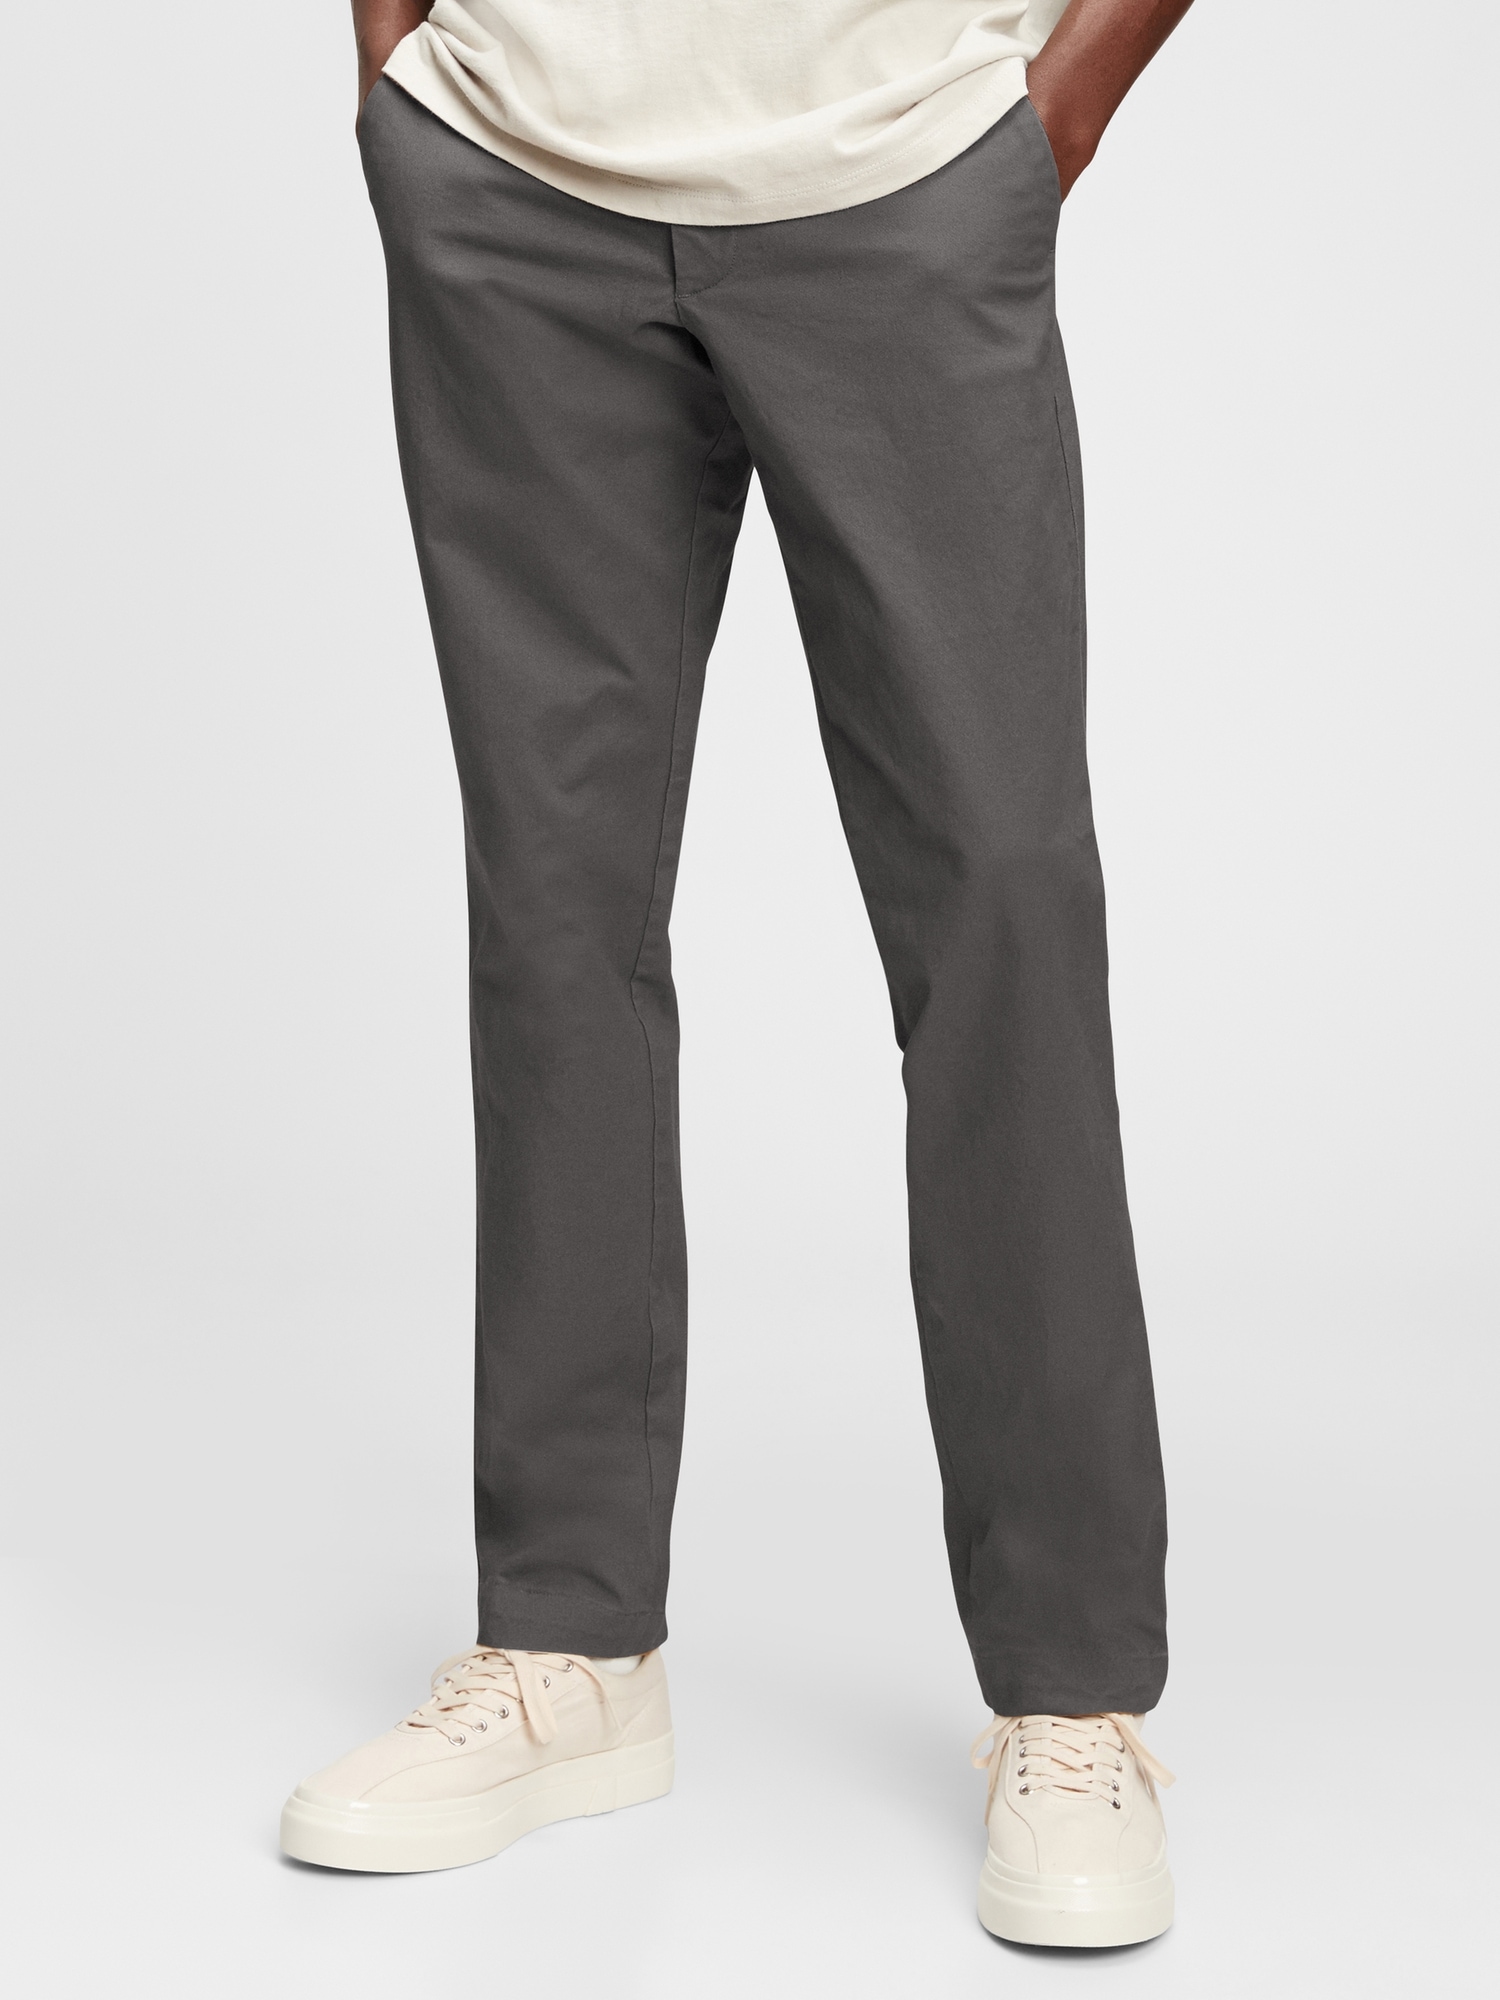 Gap Modern Khakis In Slim Fit With Flex In Soft Black